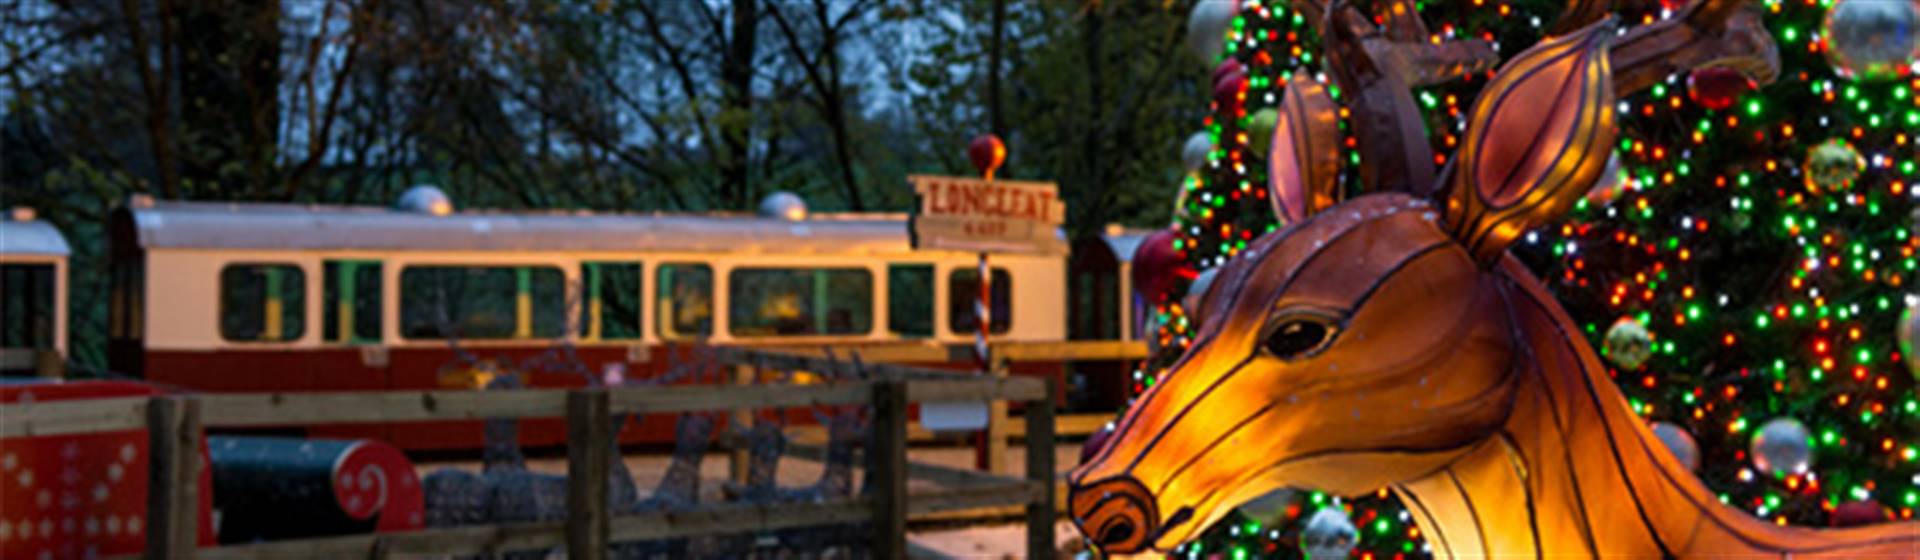 longleat safari park christmas lights